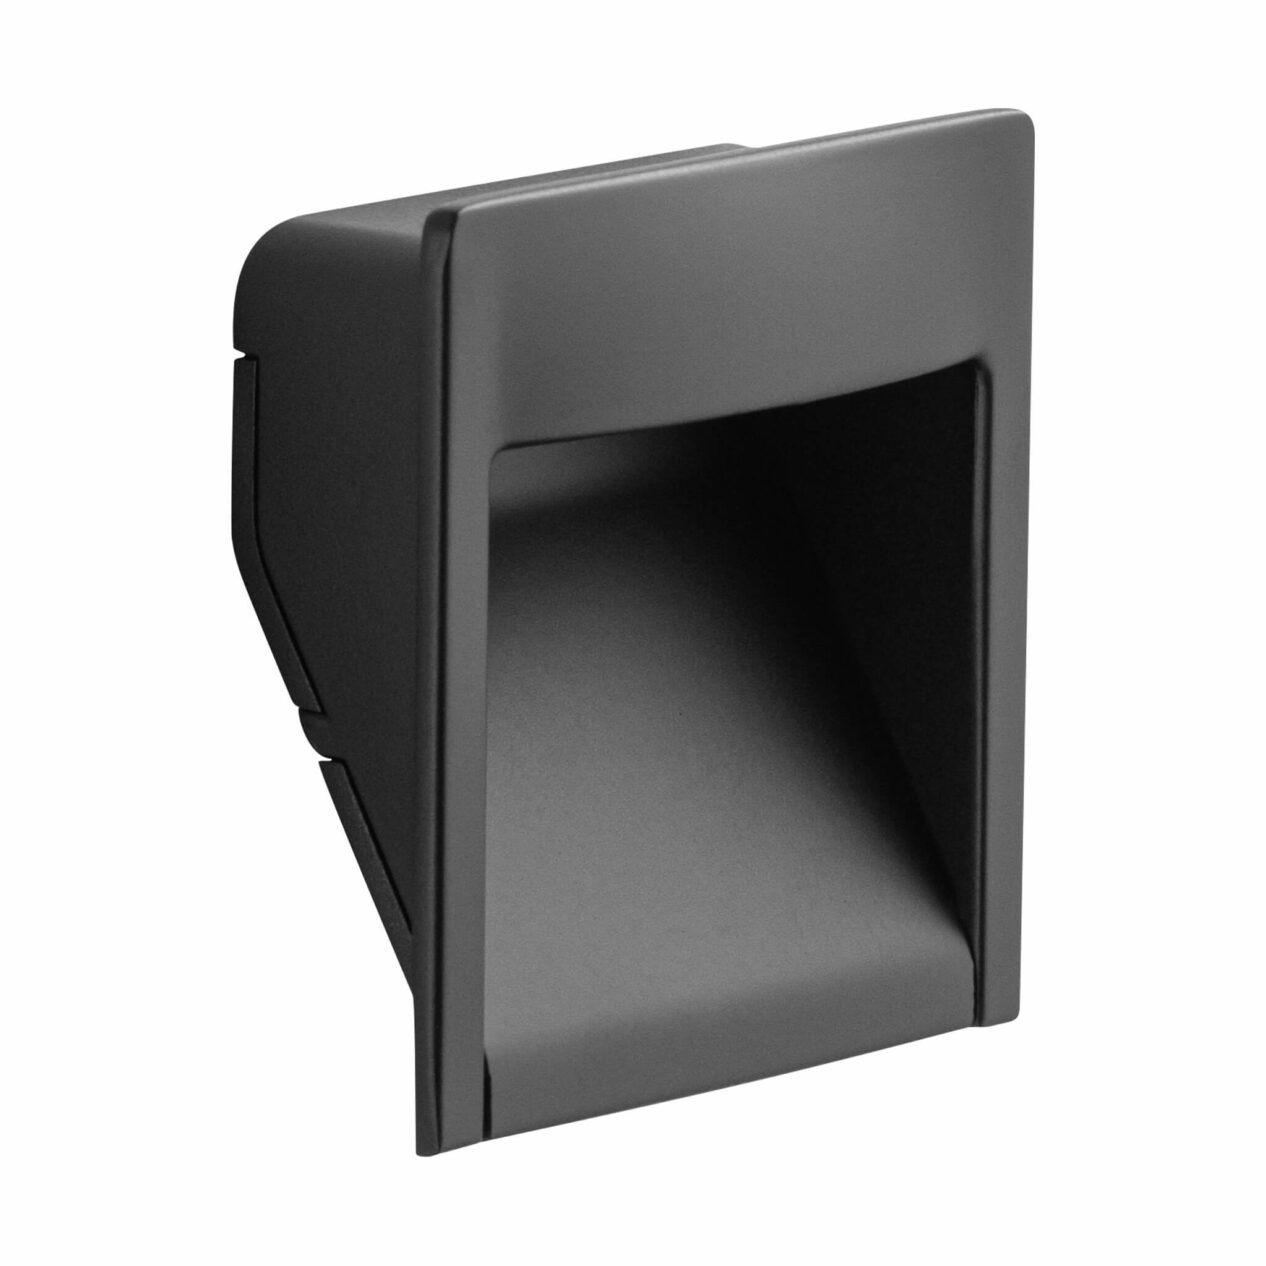 Black square flush-mounted handle